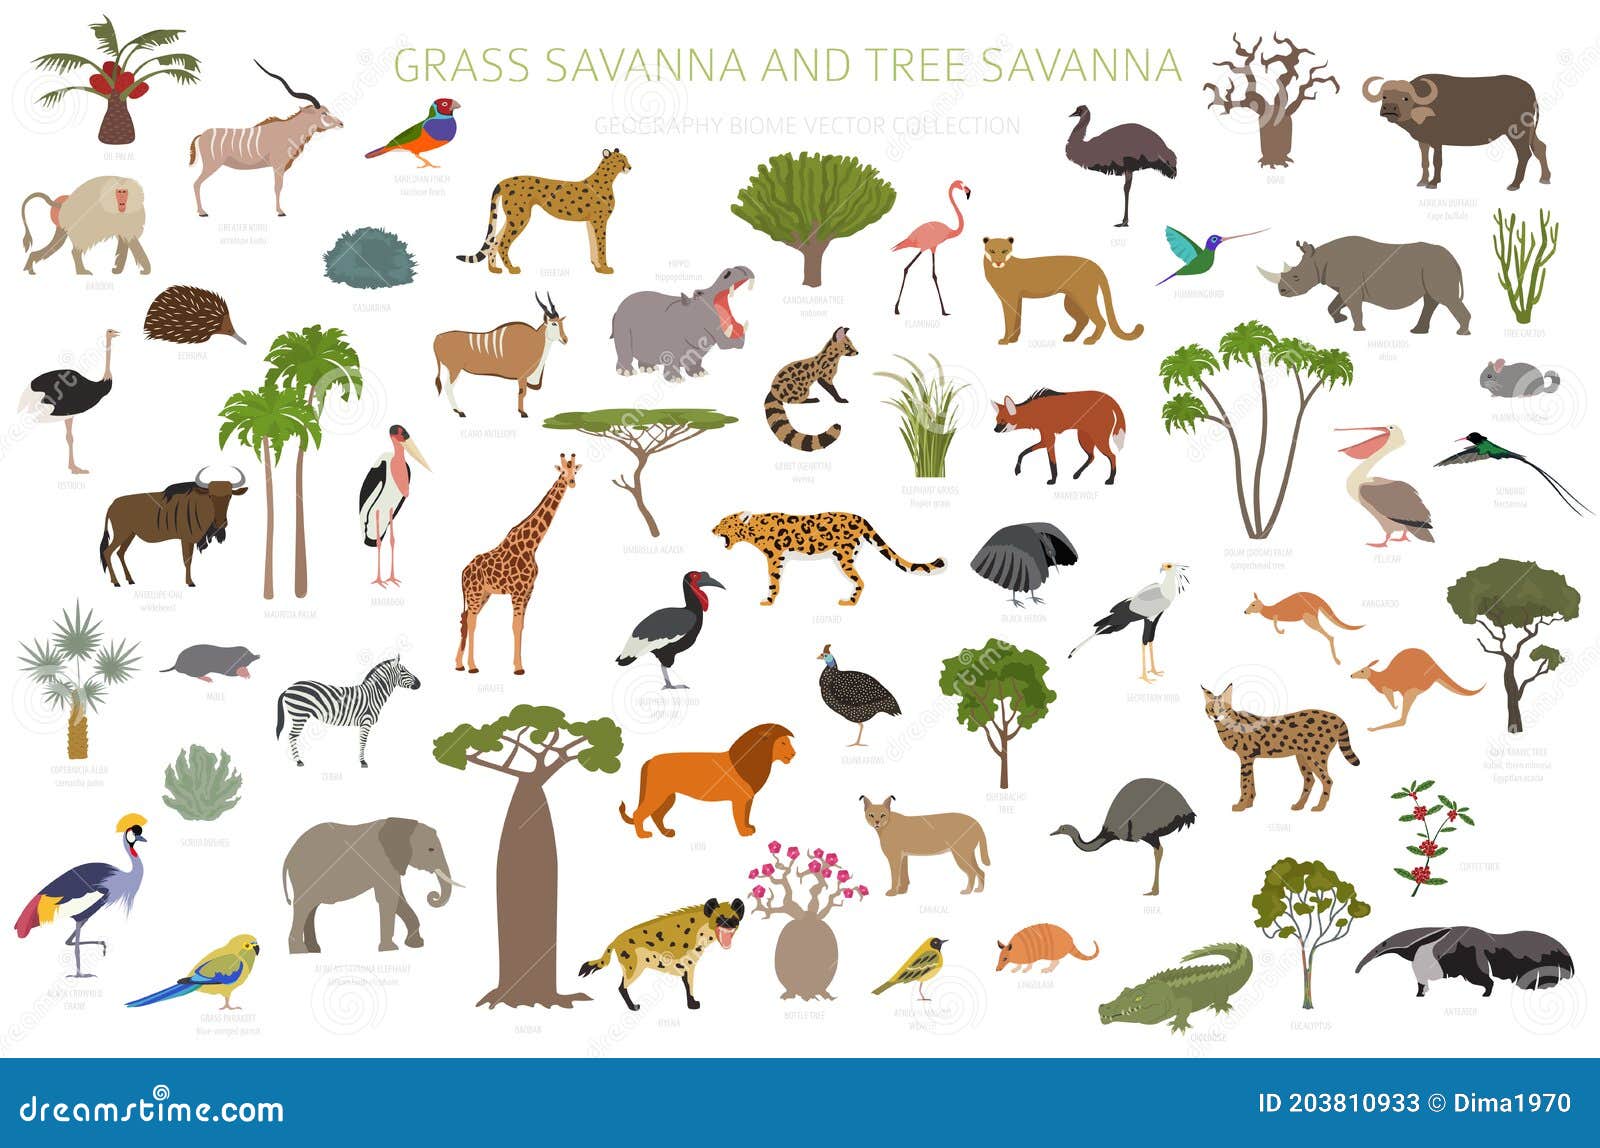 Tree Savanna and Grass Savanna Biome, Natural Region Infographic. Woodland  and Grassland Savannah, Prarie, Pampa Stock Vector - Illustration of area,  candelabra: 203810933